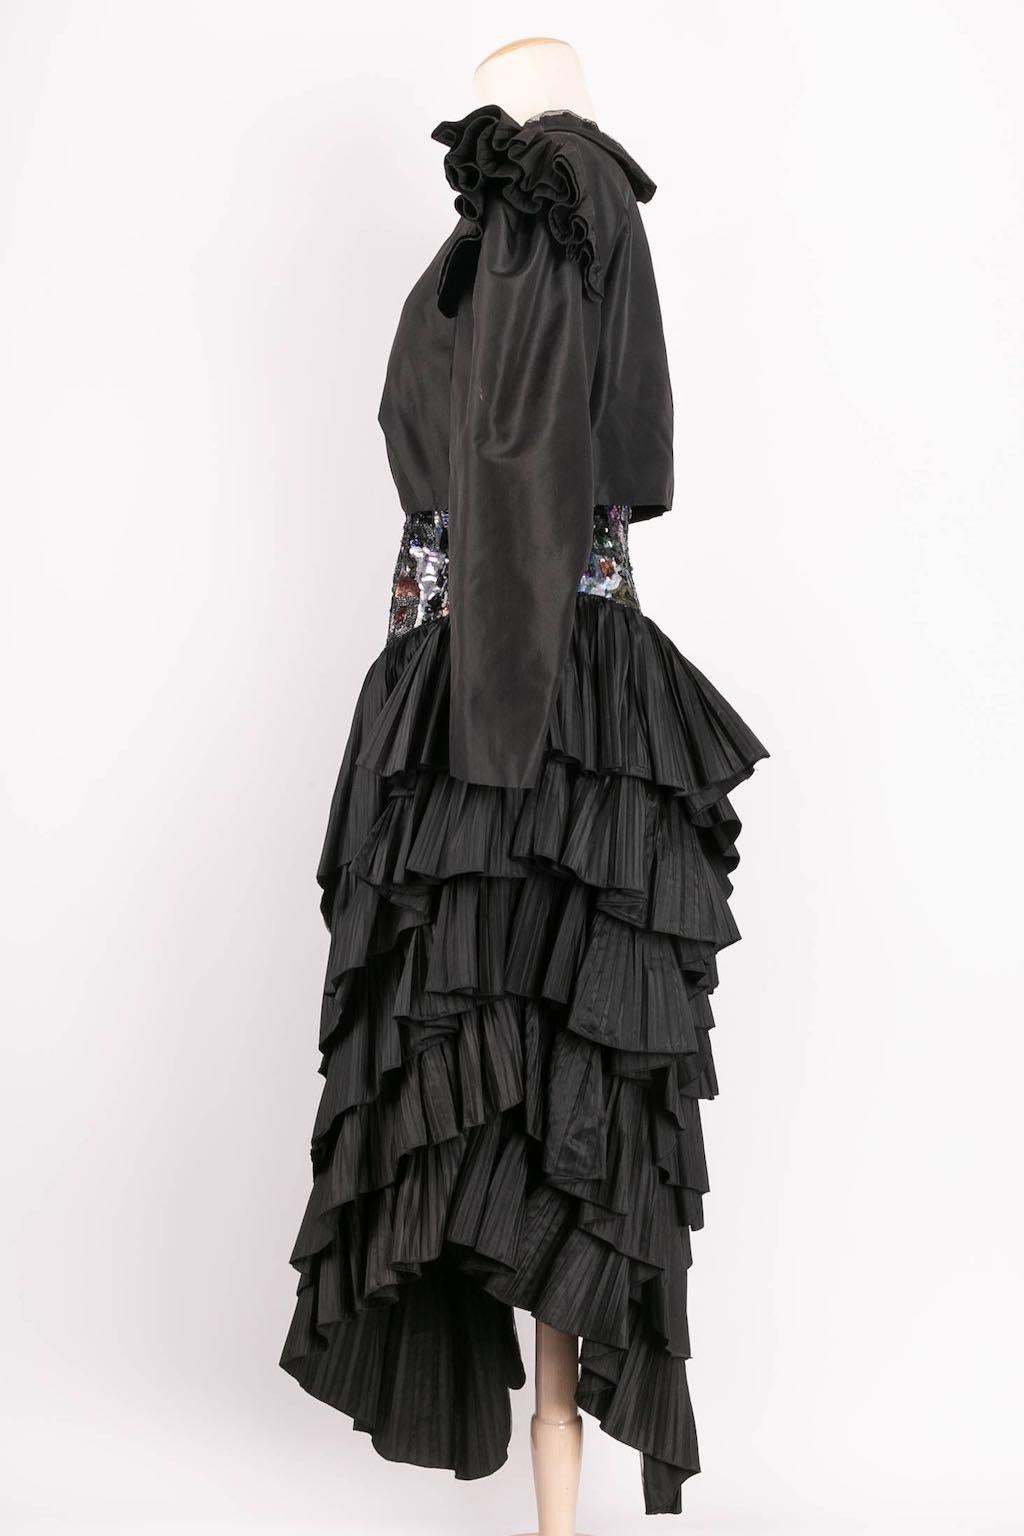 Loris Azzaro Asymmetrical Bustier Dress and its Bolero For Sale 4